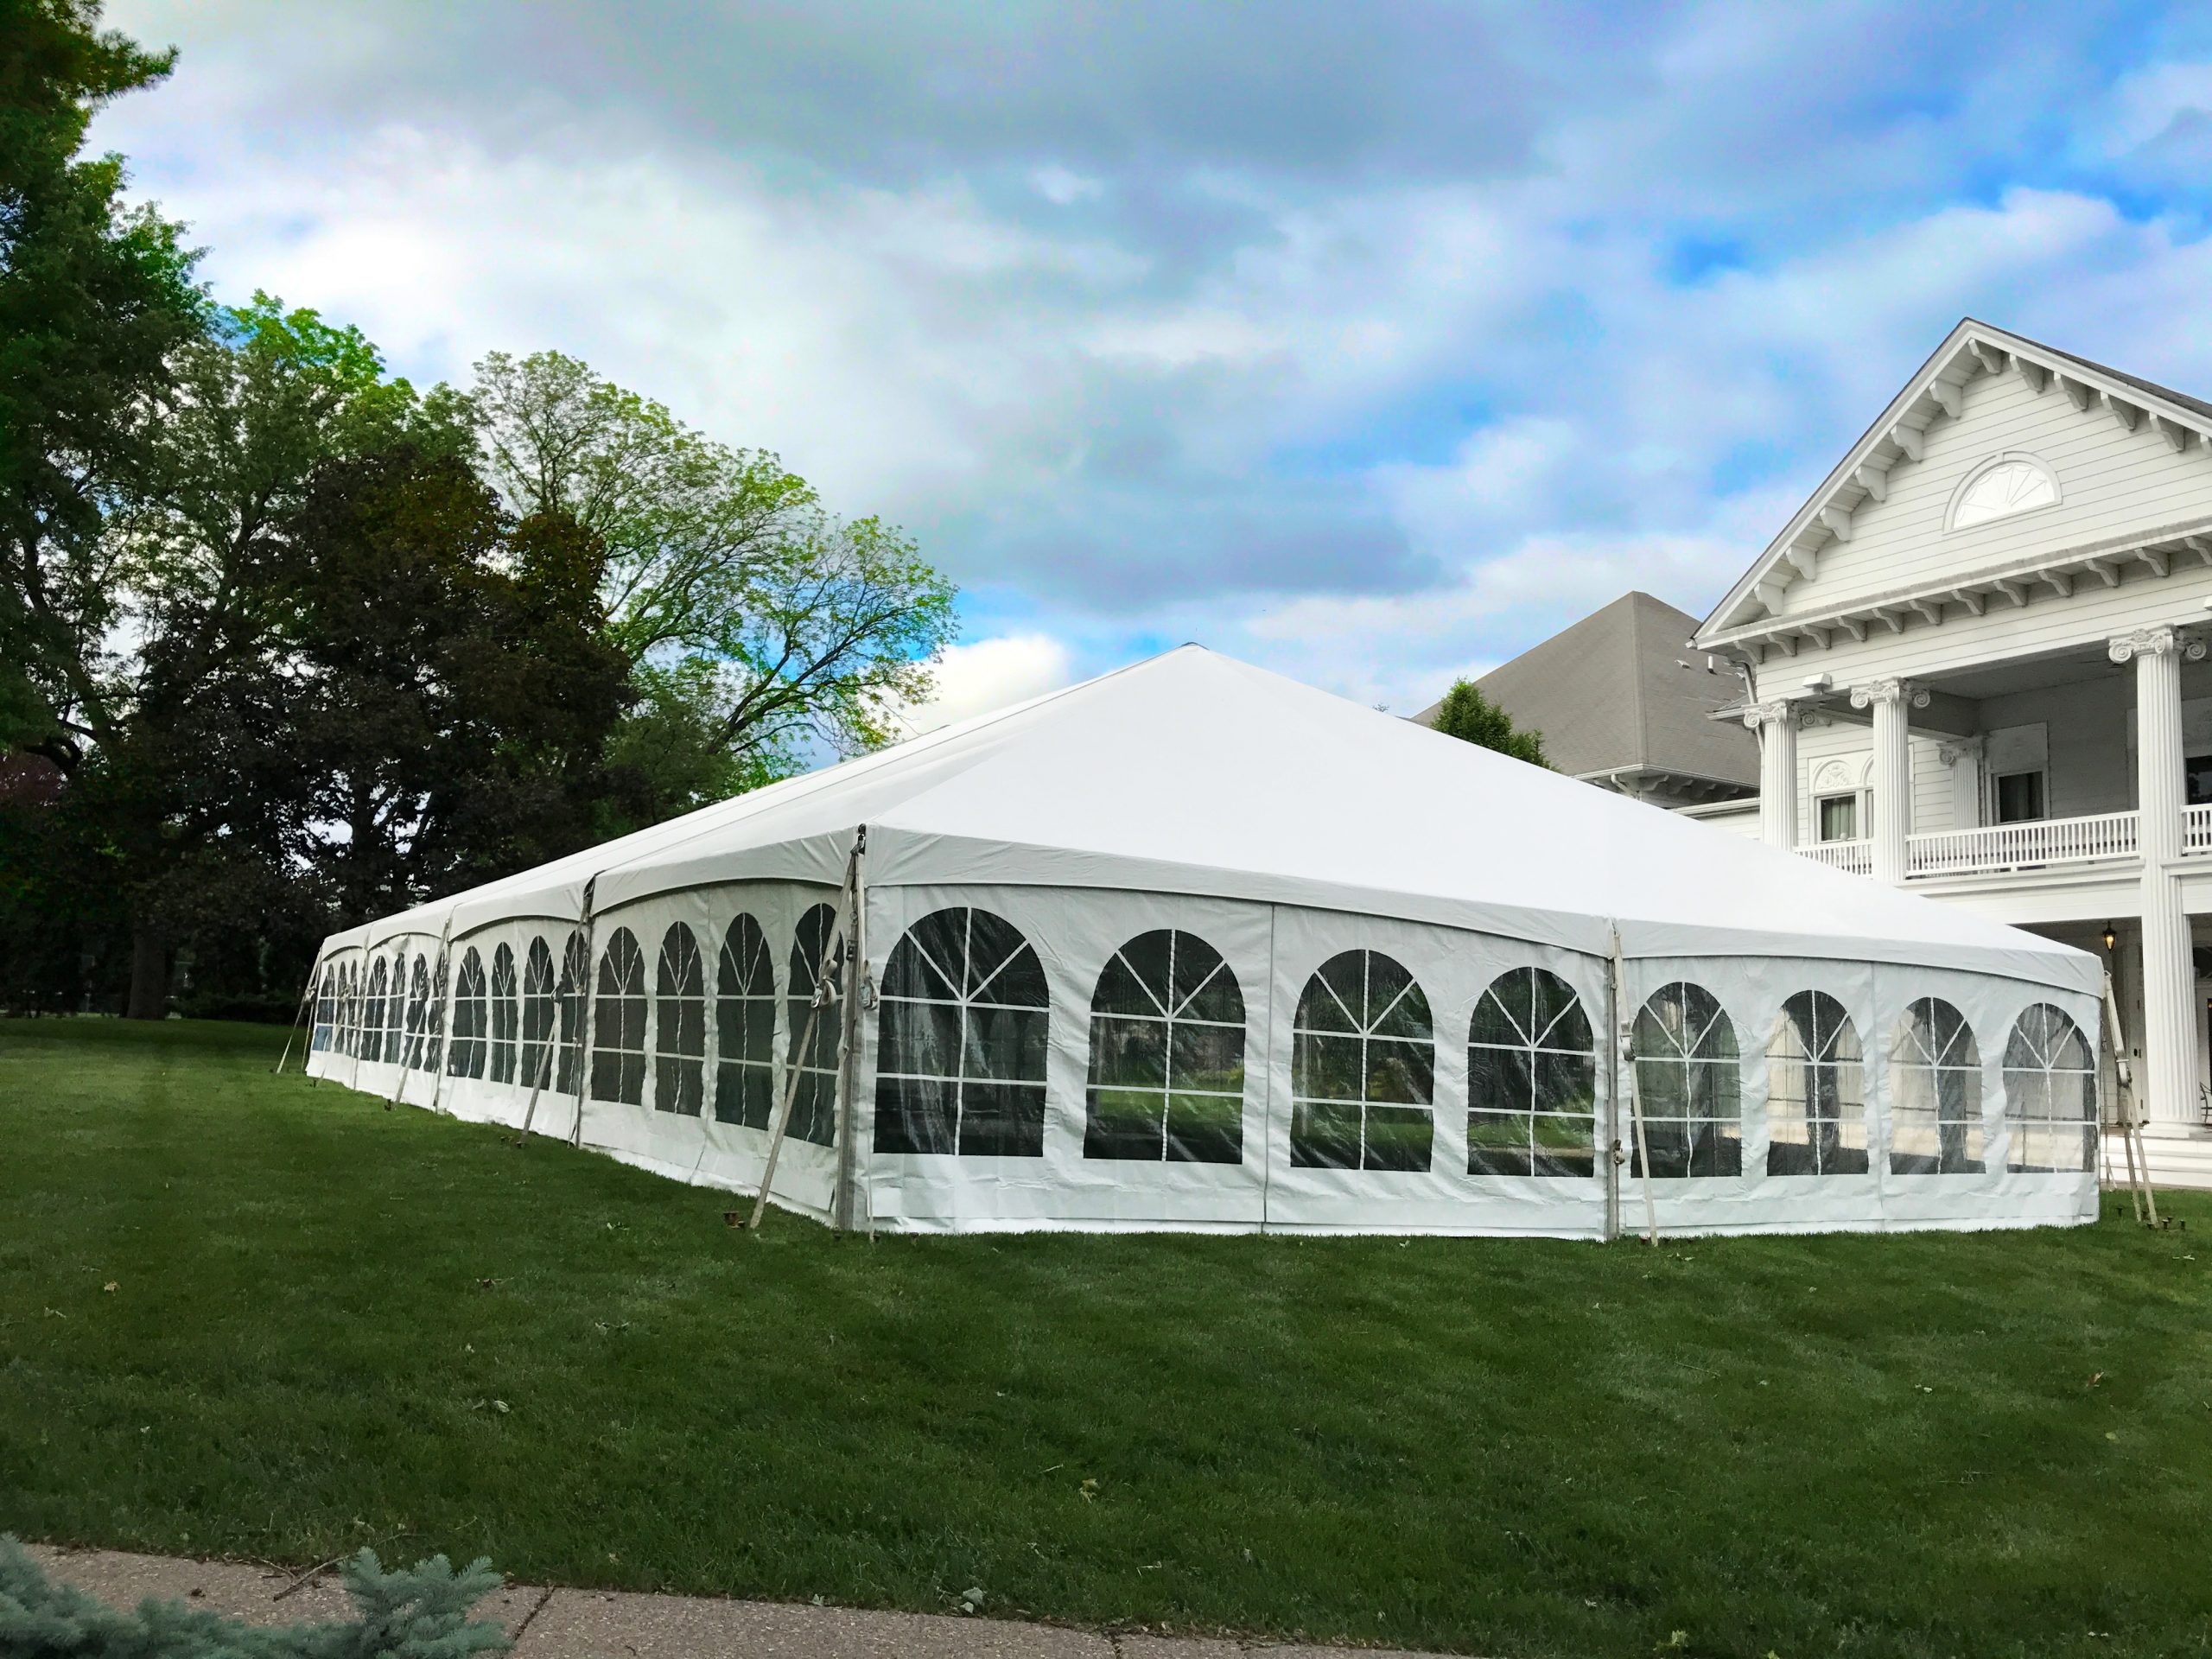 40' x 80' Hybrid wedding tent at Outing Club on Brady Street in Davenport Iowa